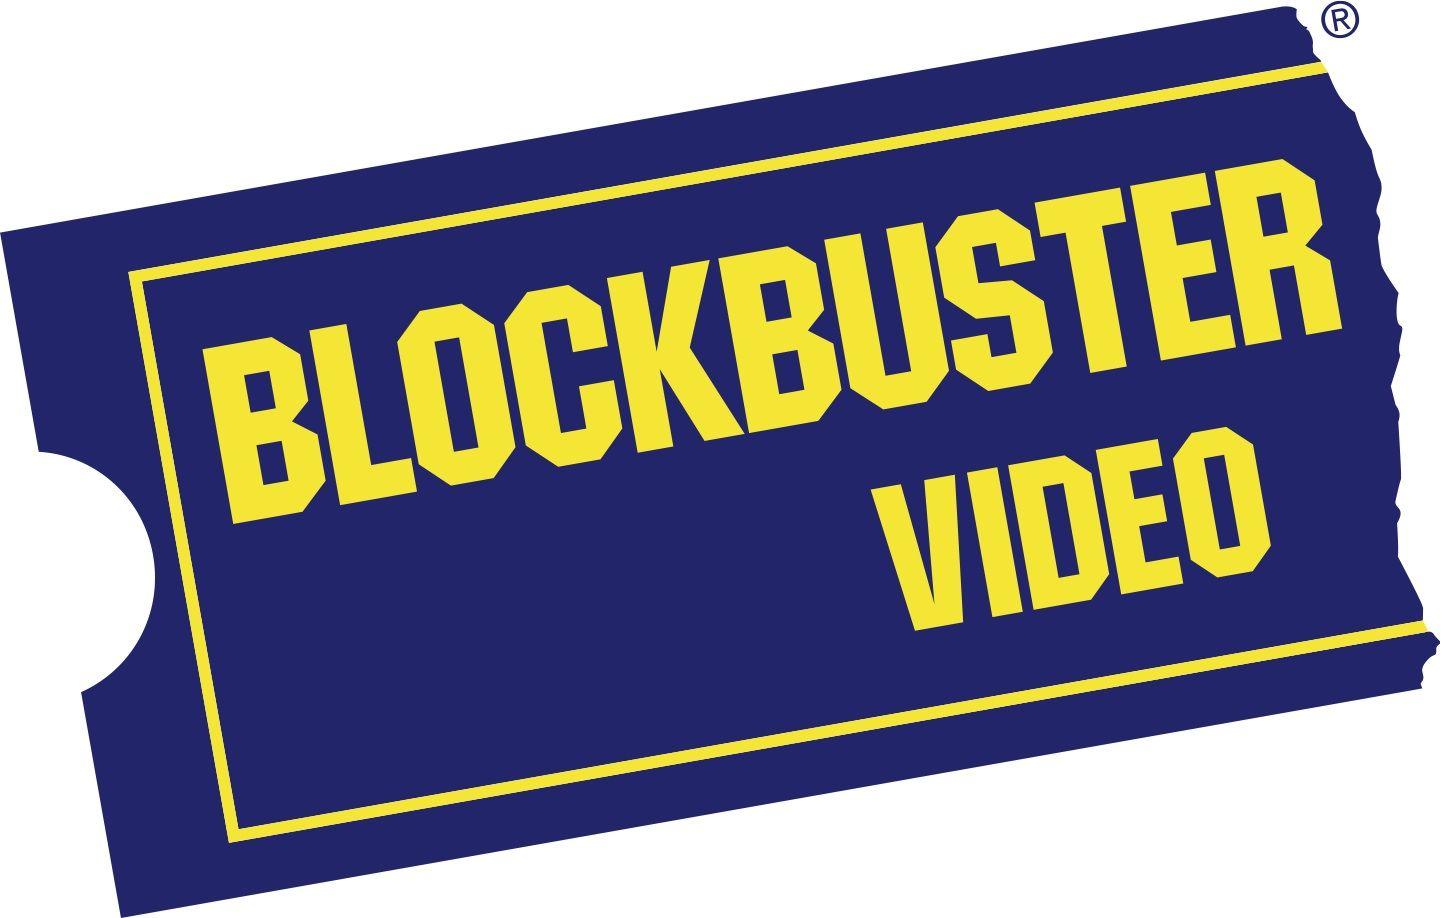 Blockbuster Logo - Image - Blockbuster video logo.jpg | Logopedia | FANDOM powered by Wikia